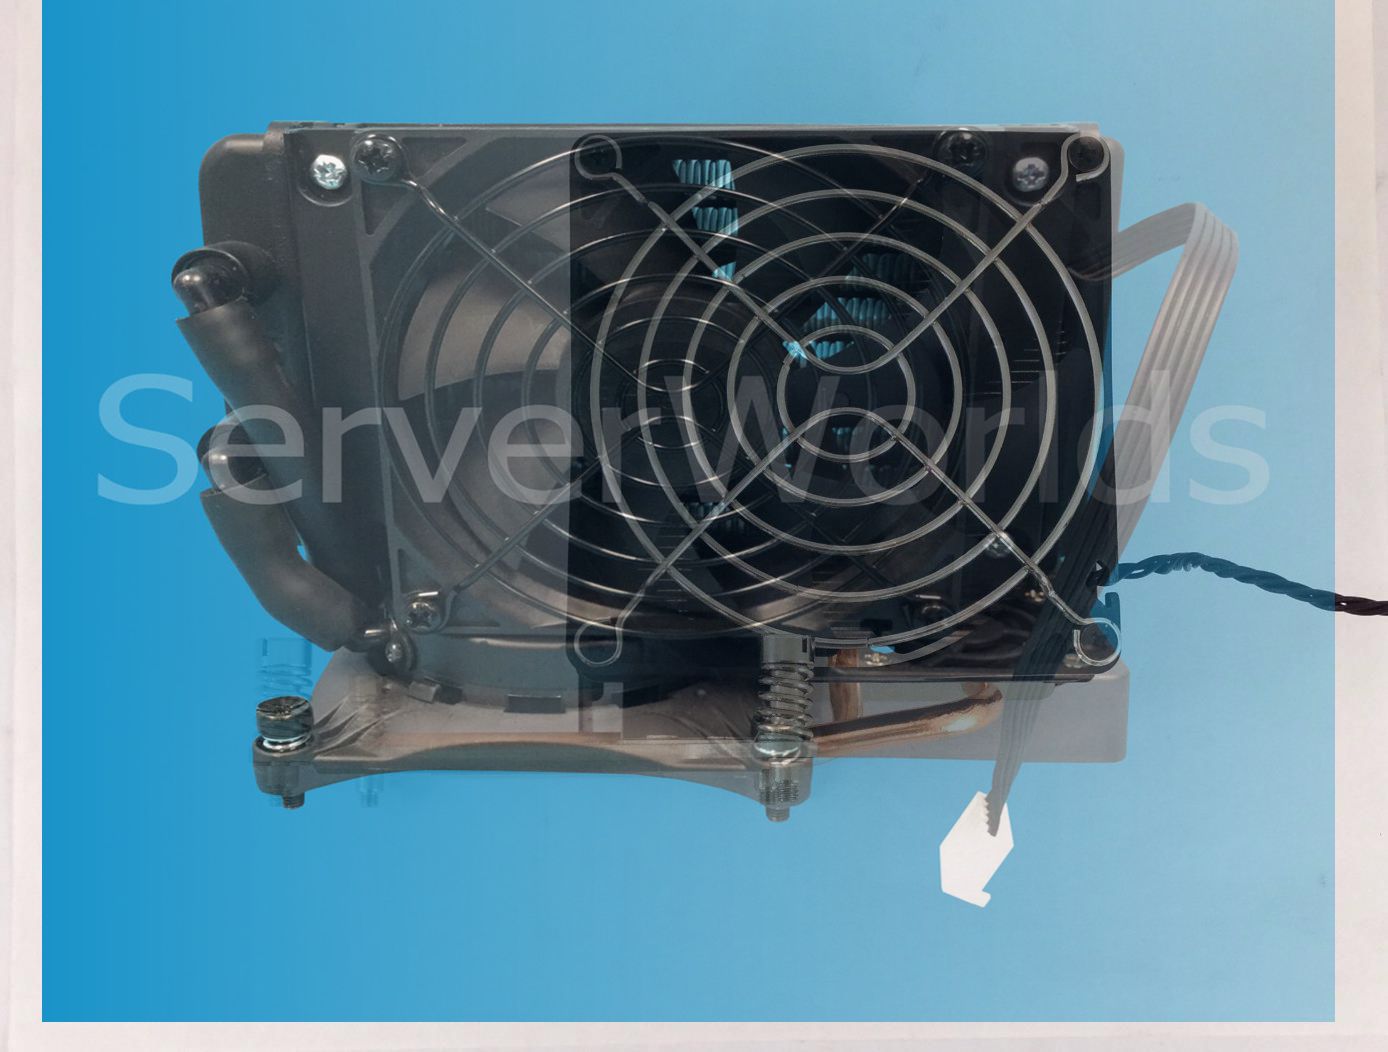 z420 Liquid cooler and Fan Heatsink overlaid_5.28.17..jpg